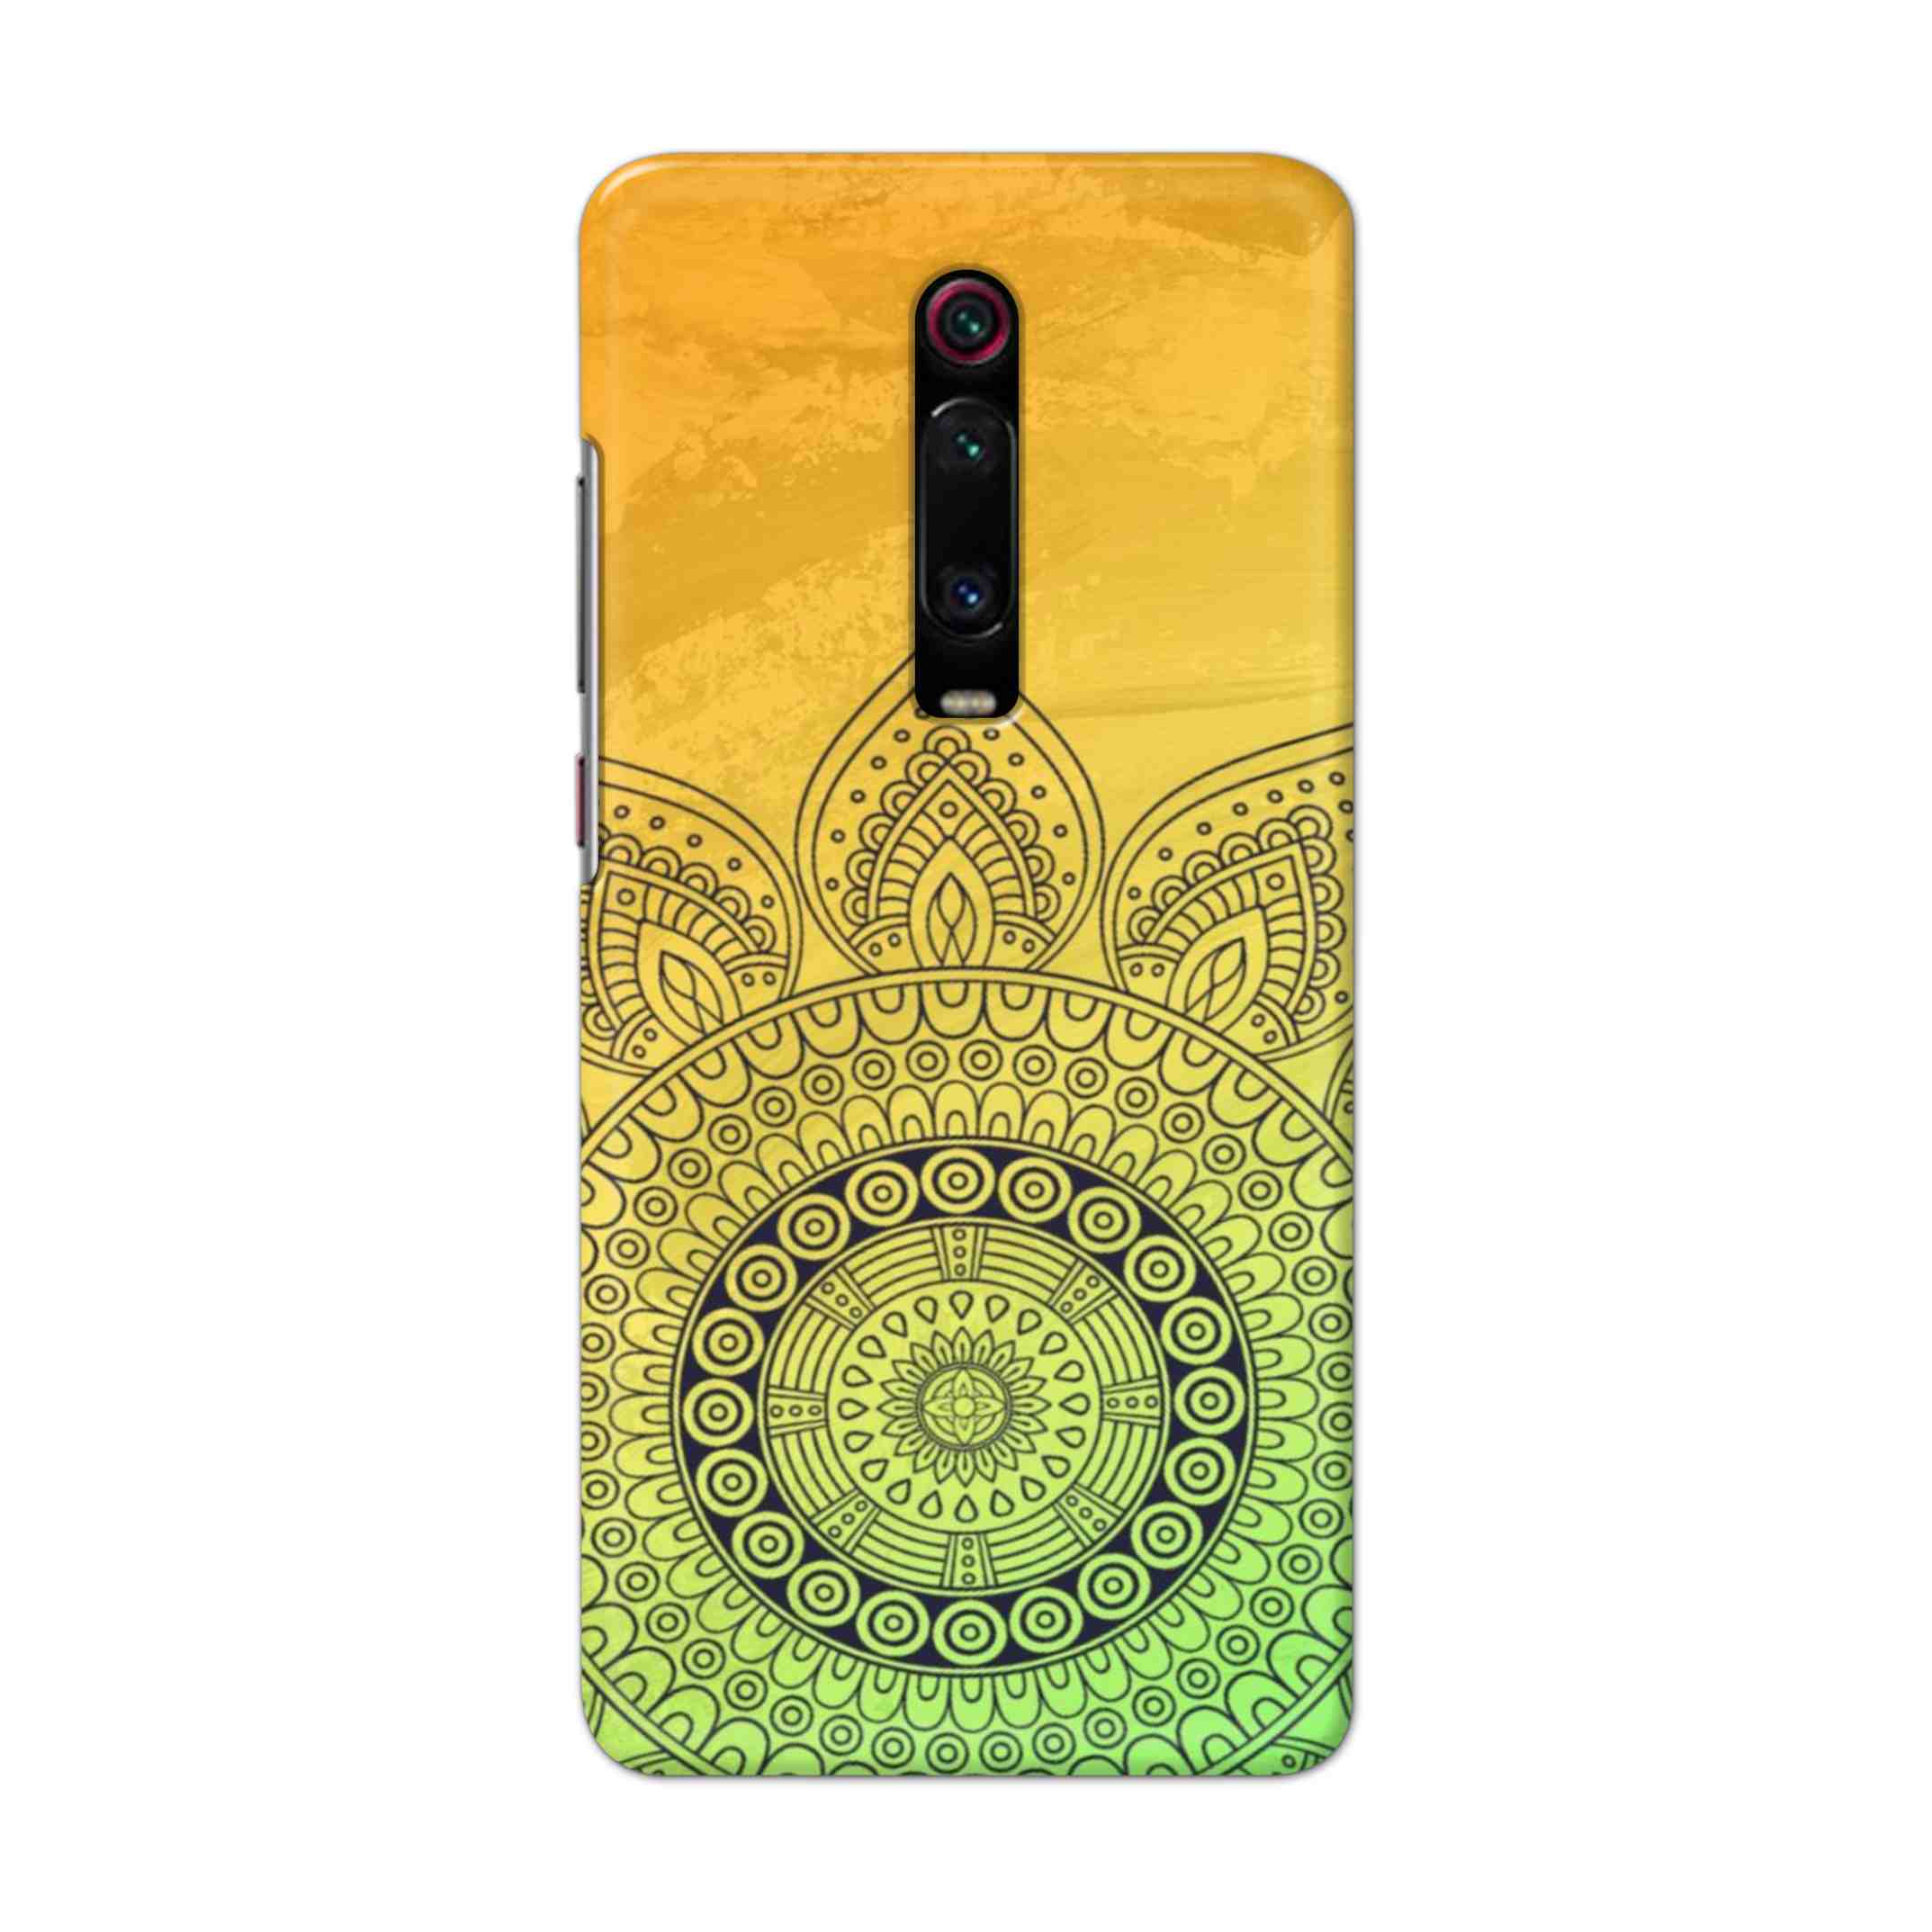 Buy Yellow Rangoli Hard Back Mobile Phone Case Cover For Xiaomi Redmi K20 Online